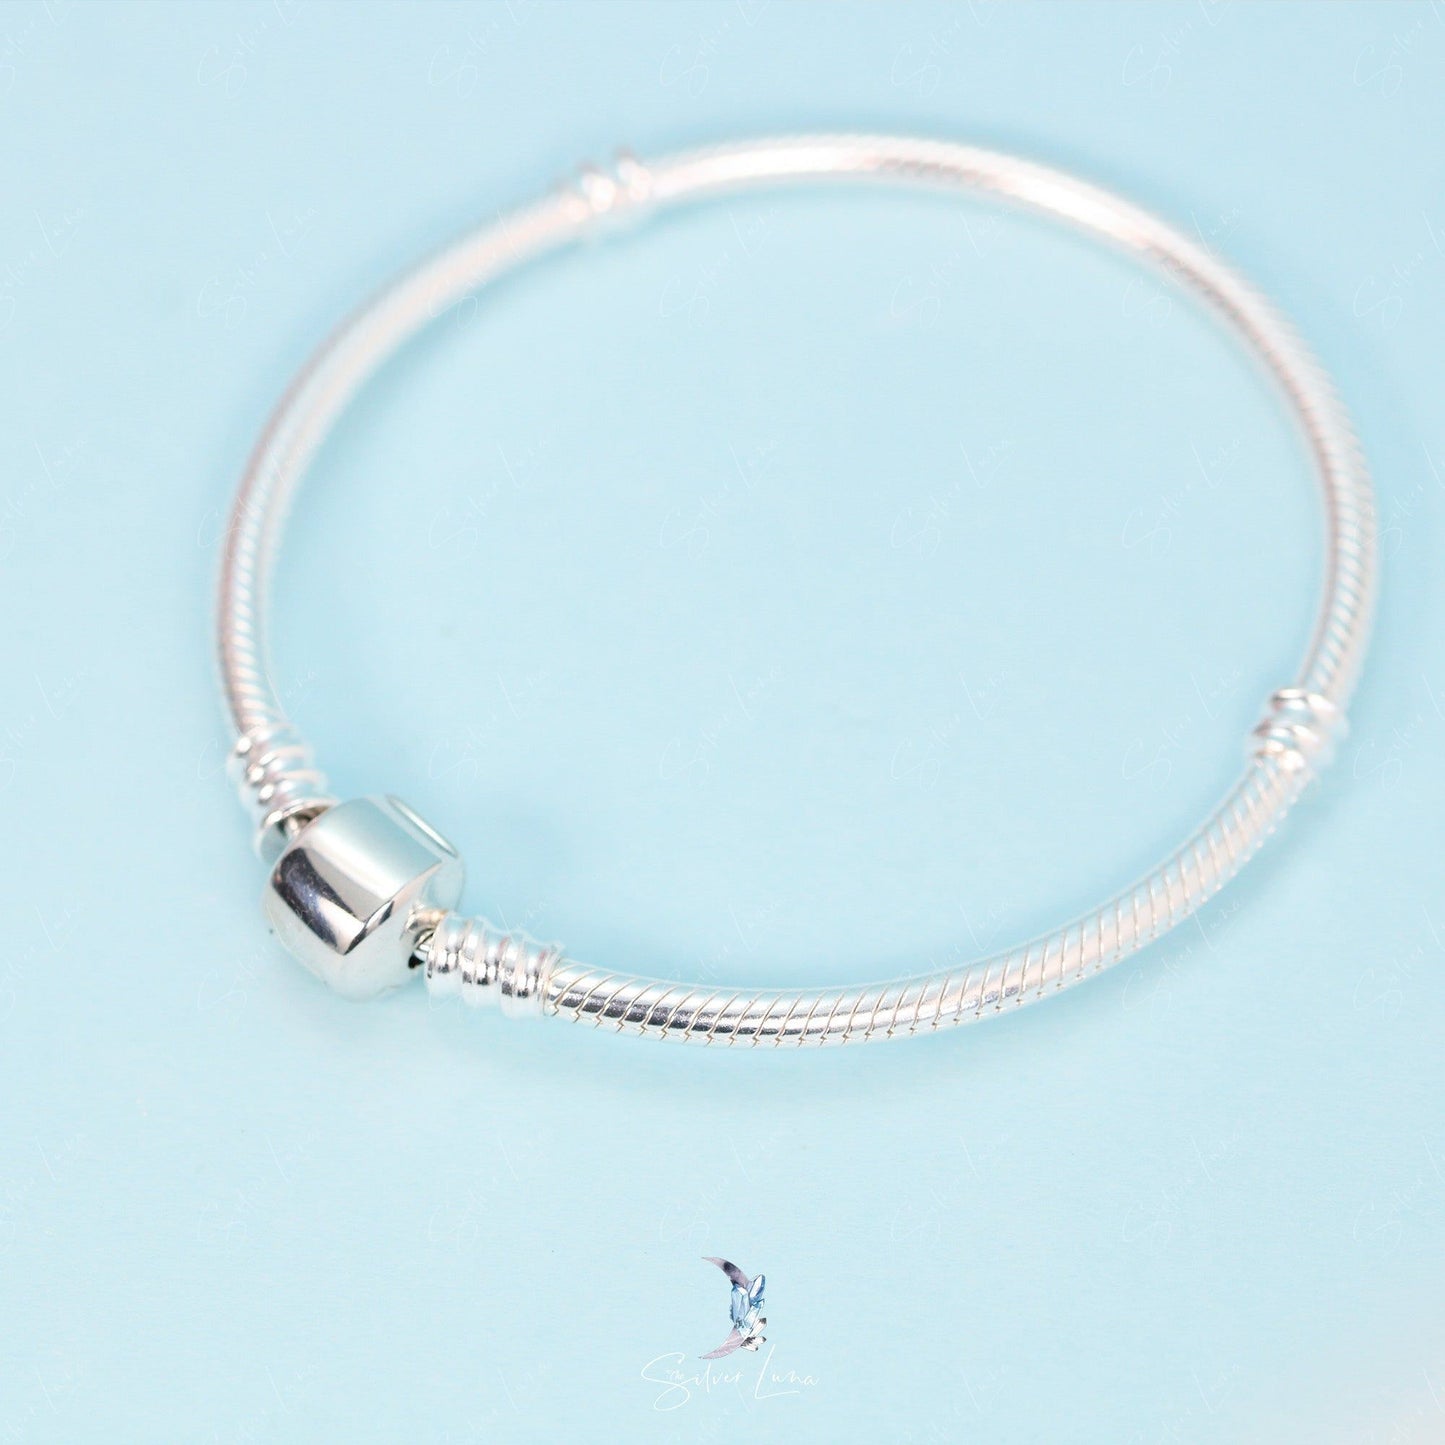 Soft snake chain sterling silver bracelet for charm